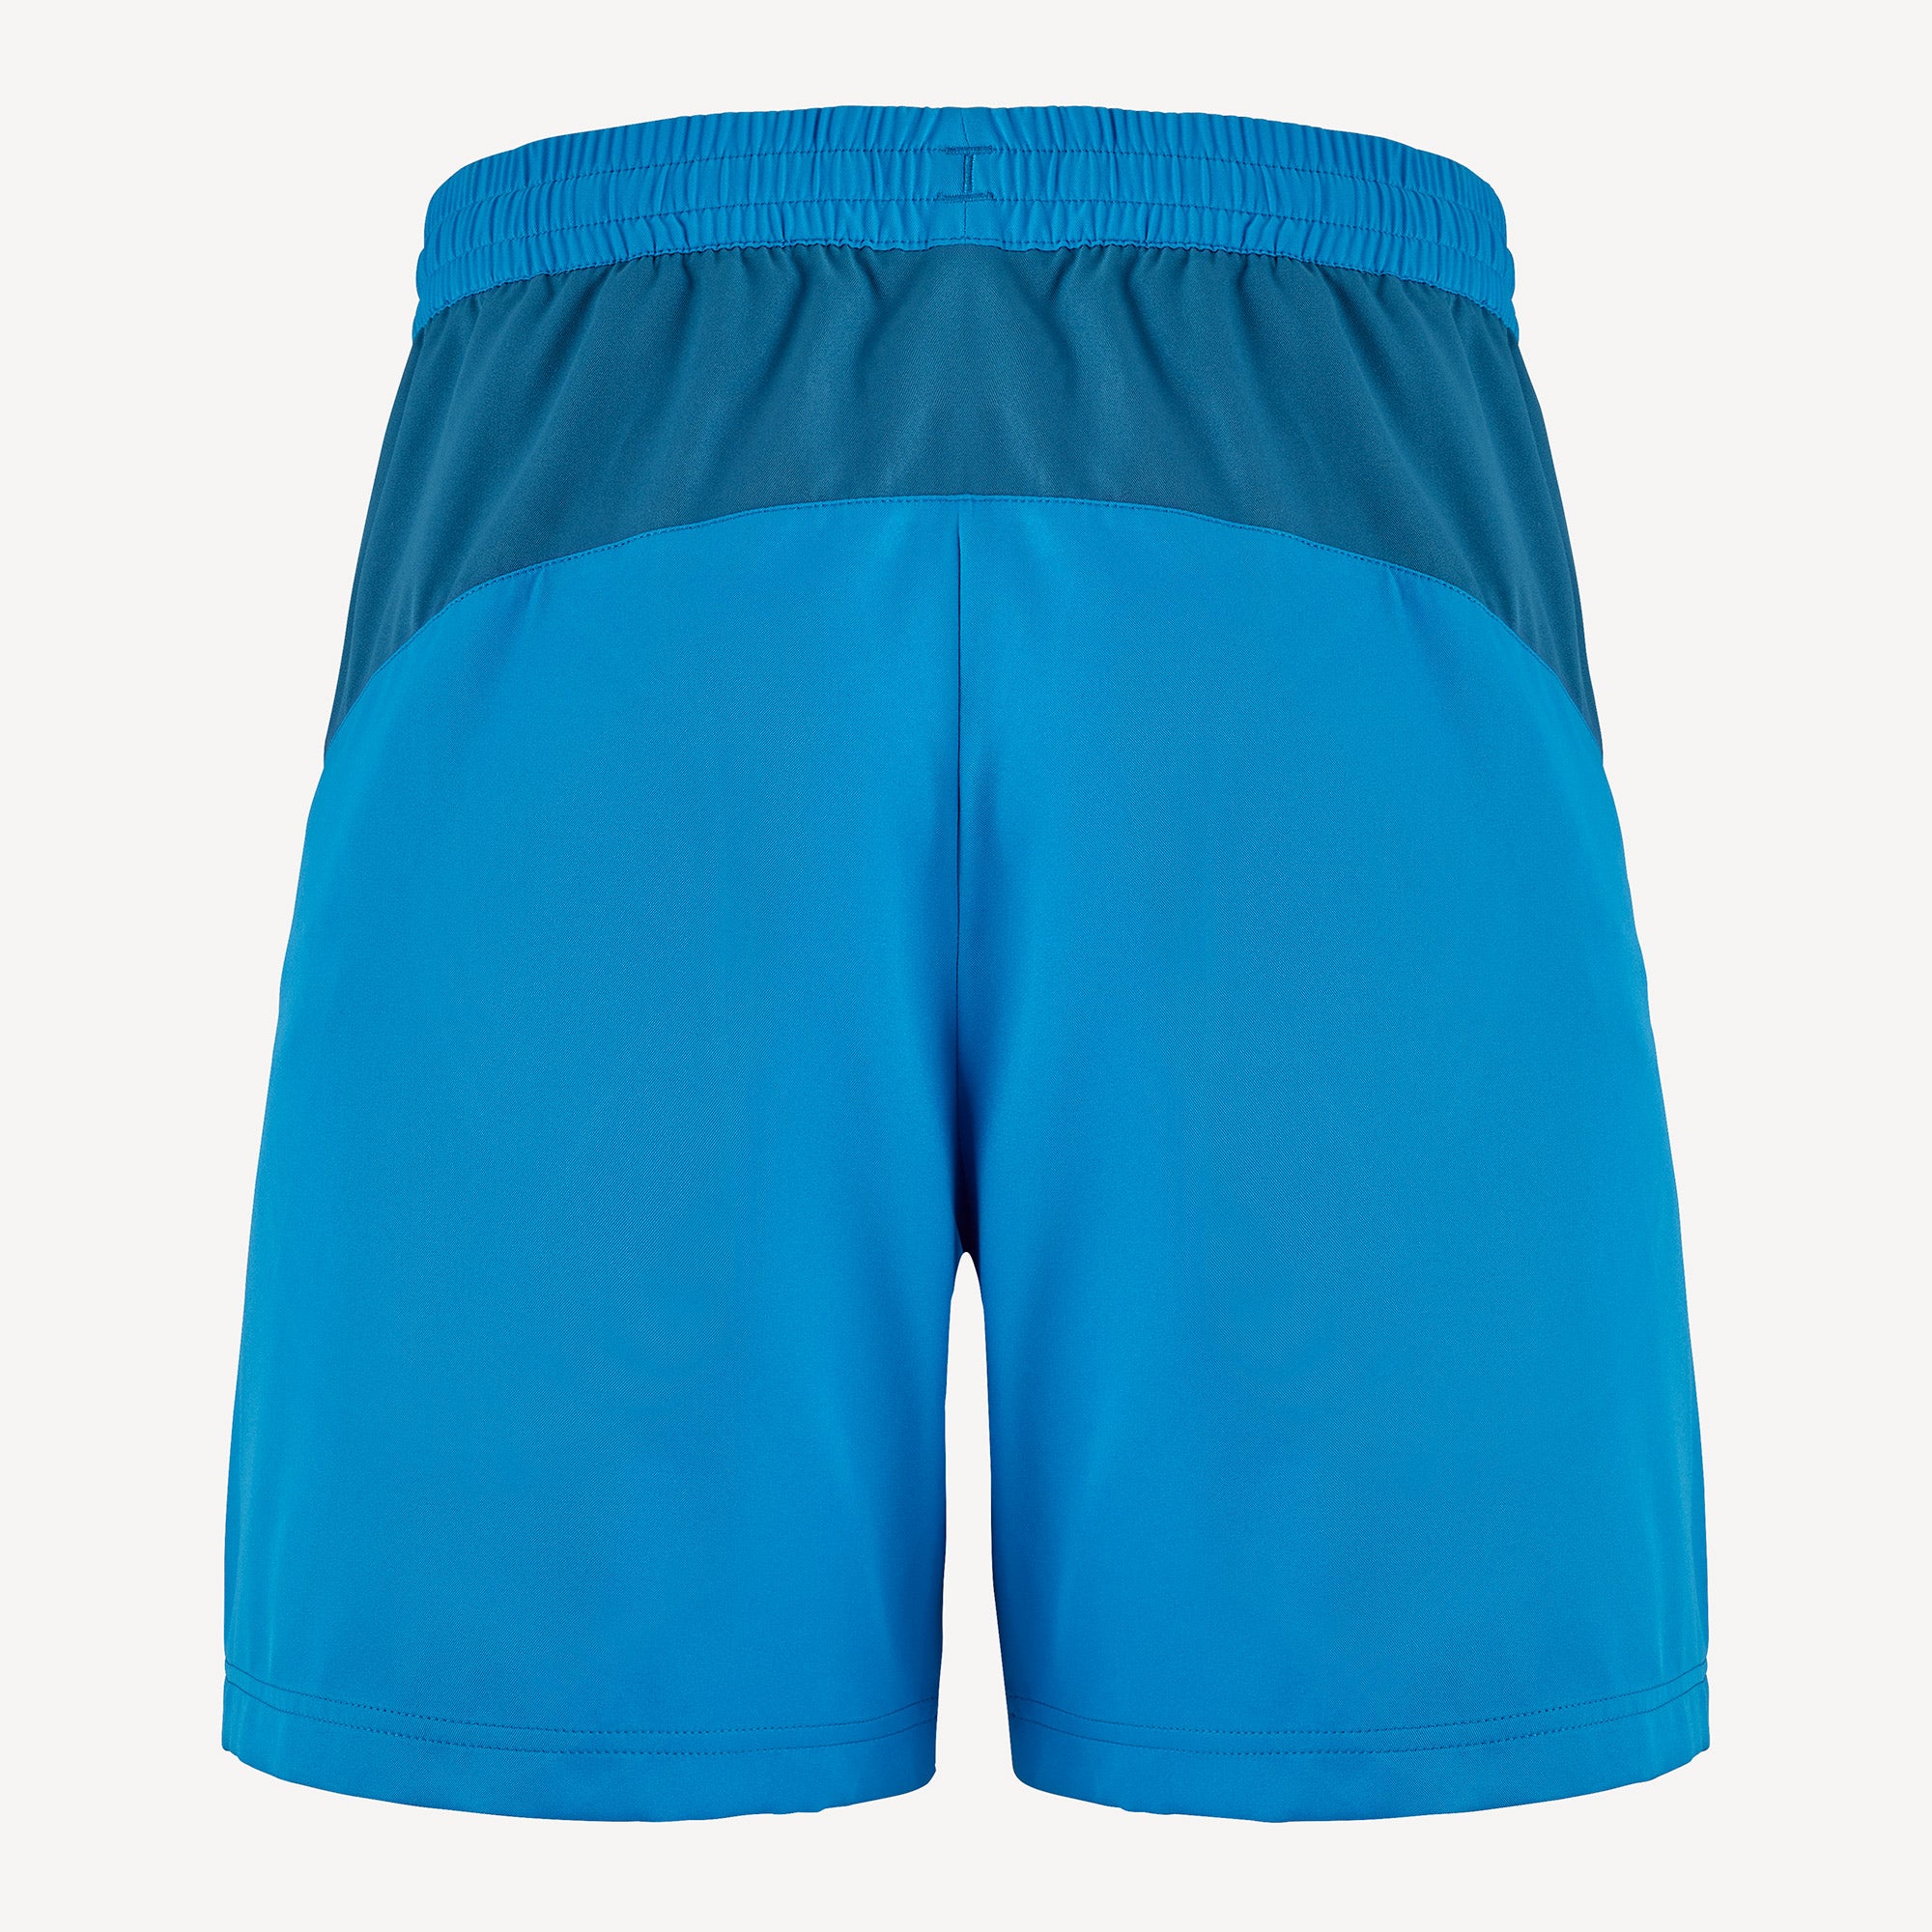 Babolat Play Club Men's Tennis Shorts Blue (2)